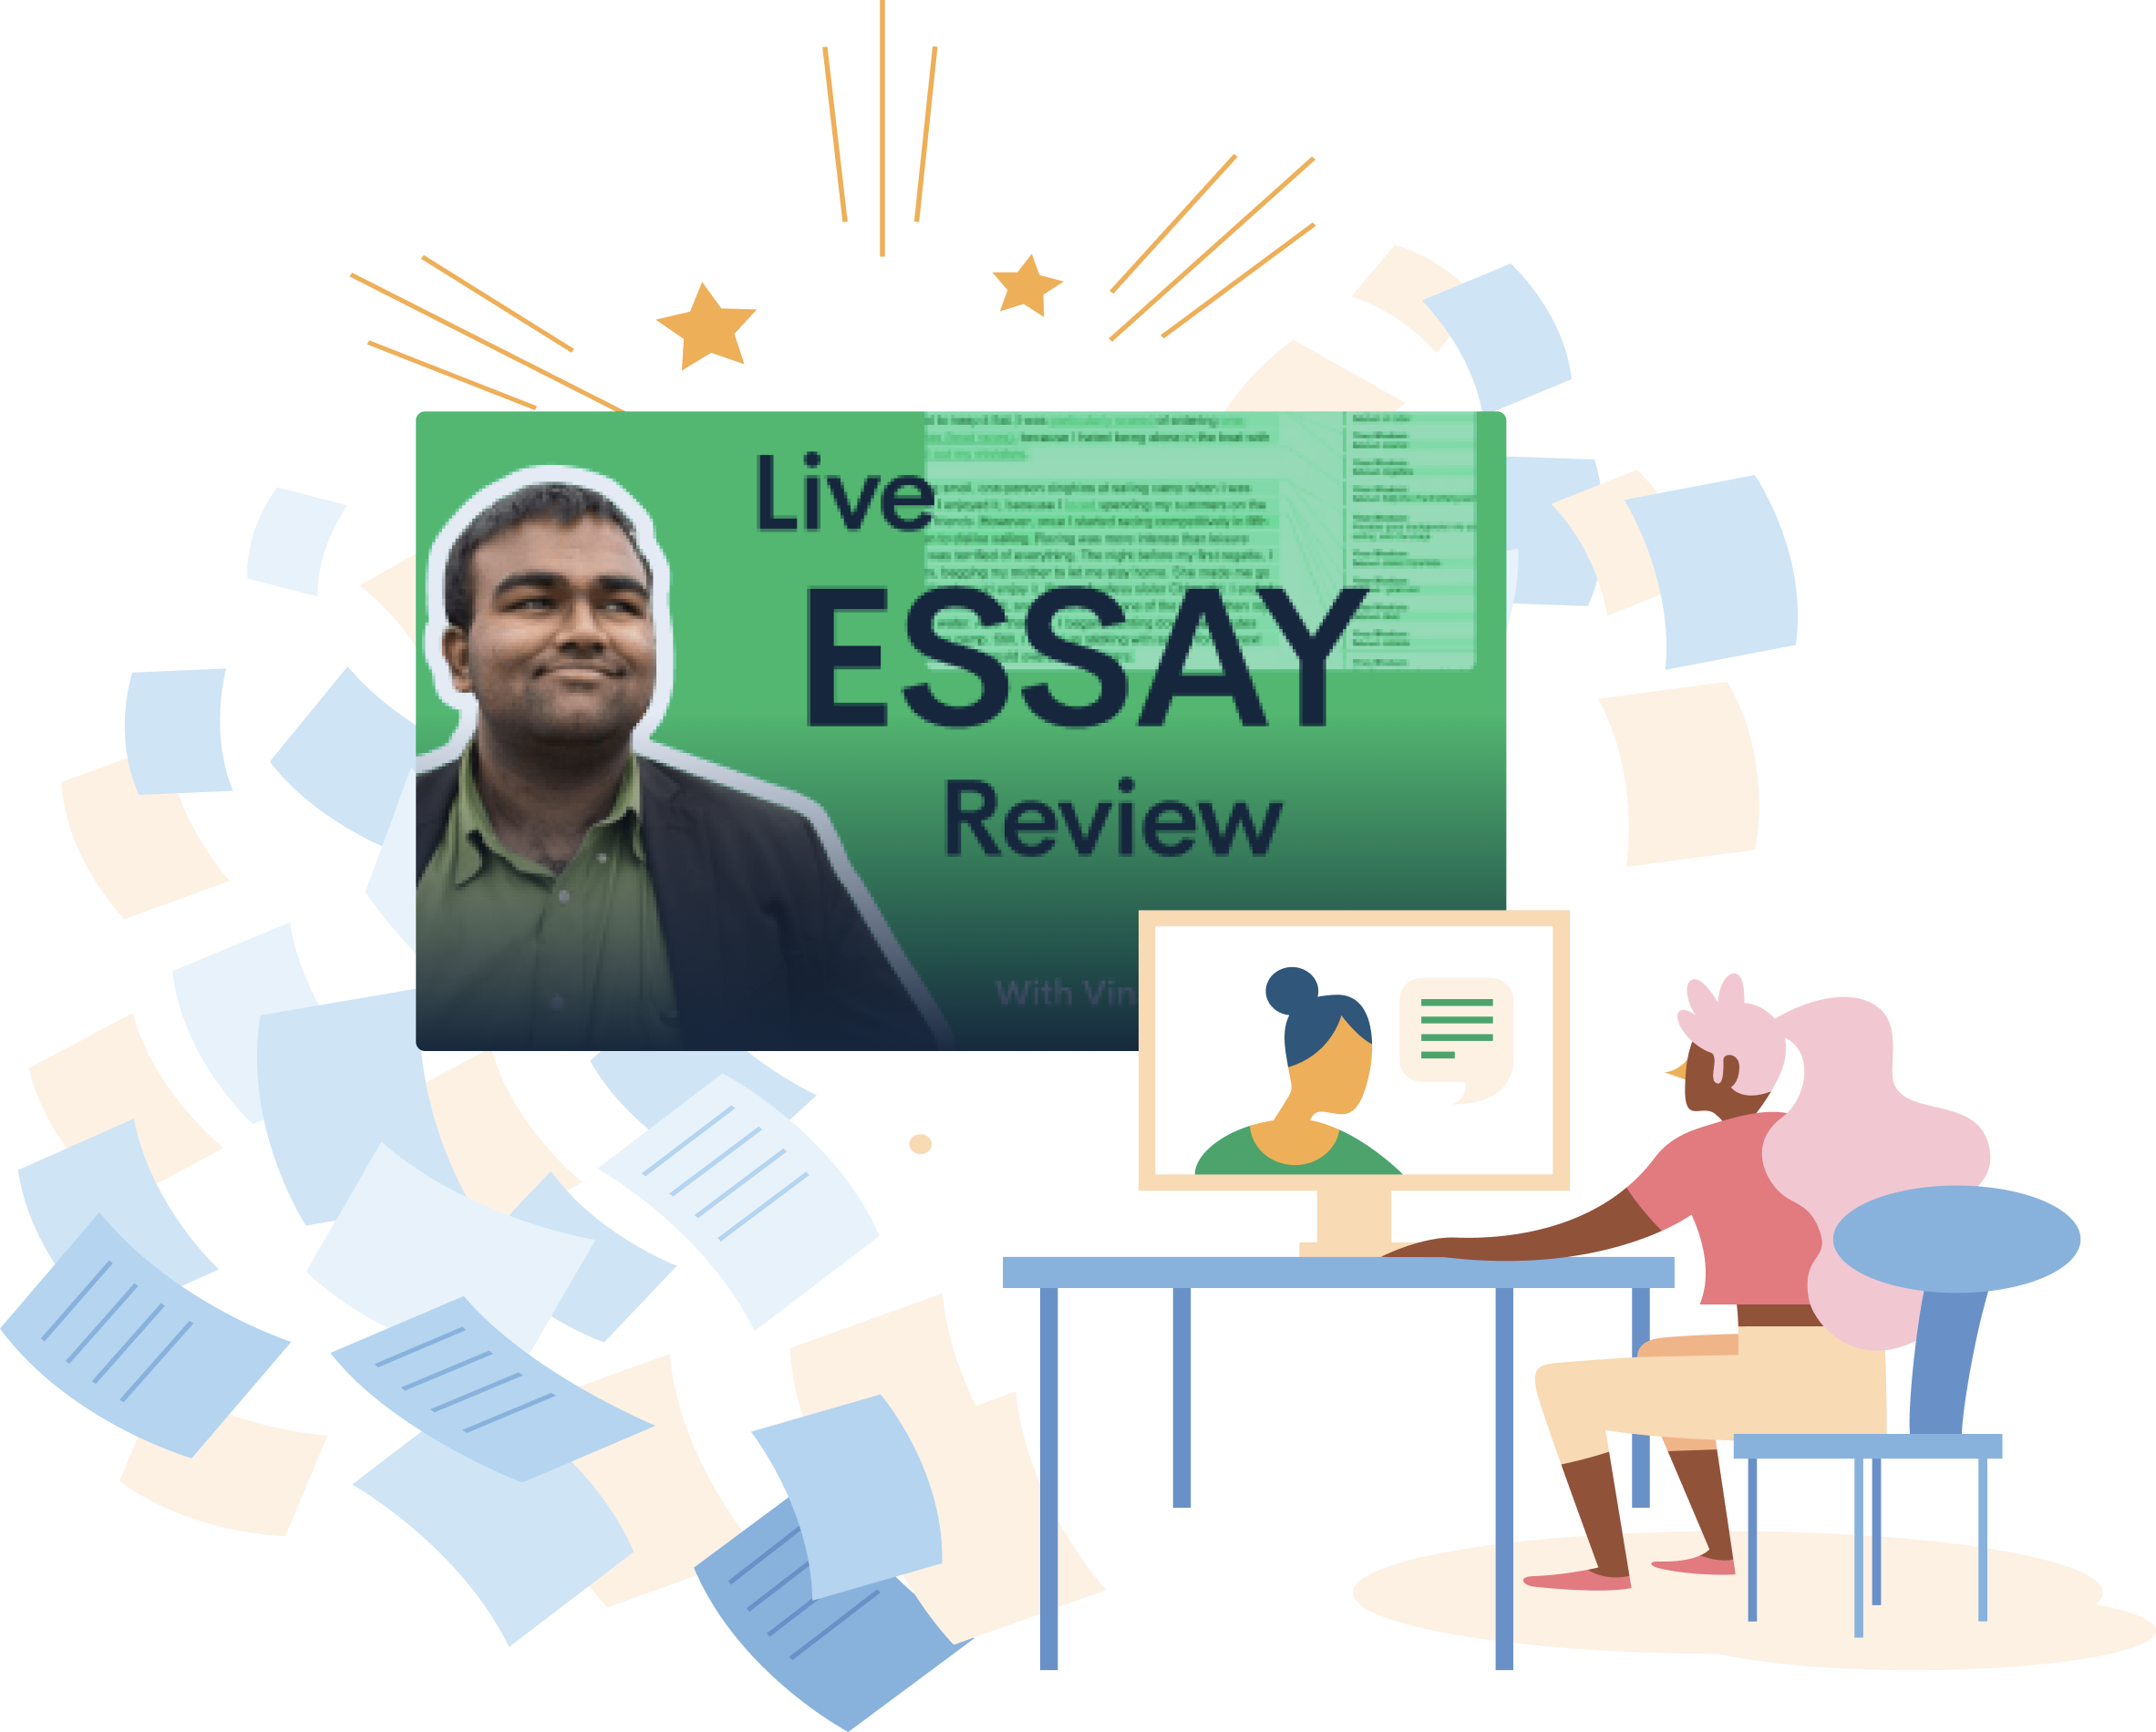 Live essay help